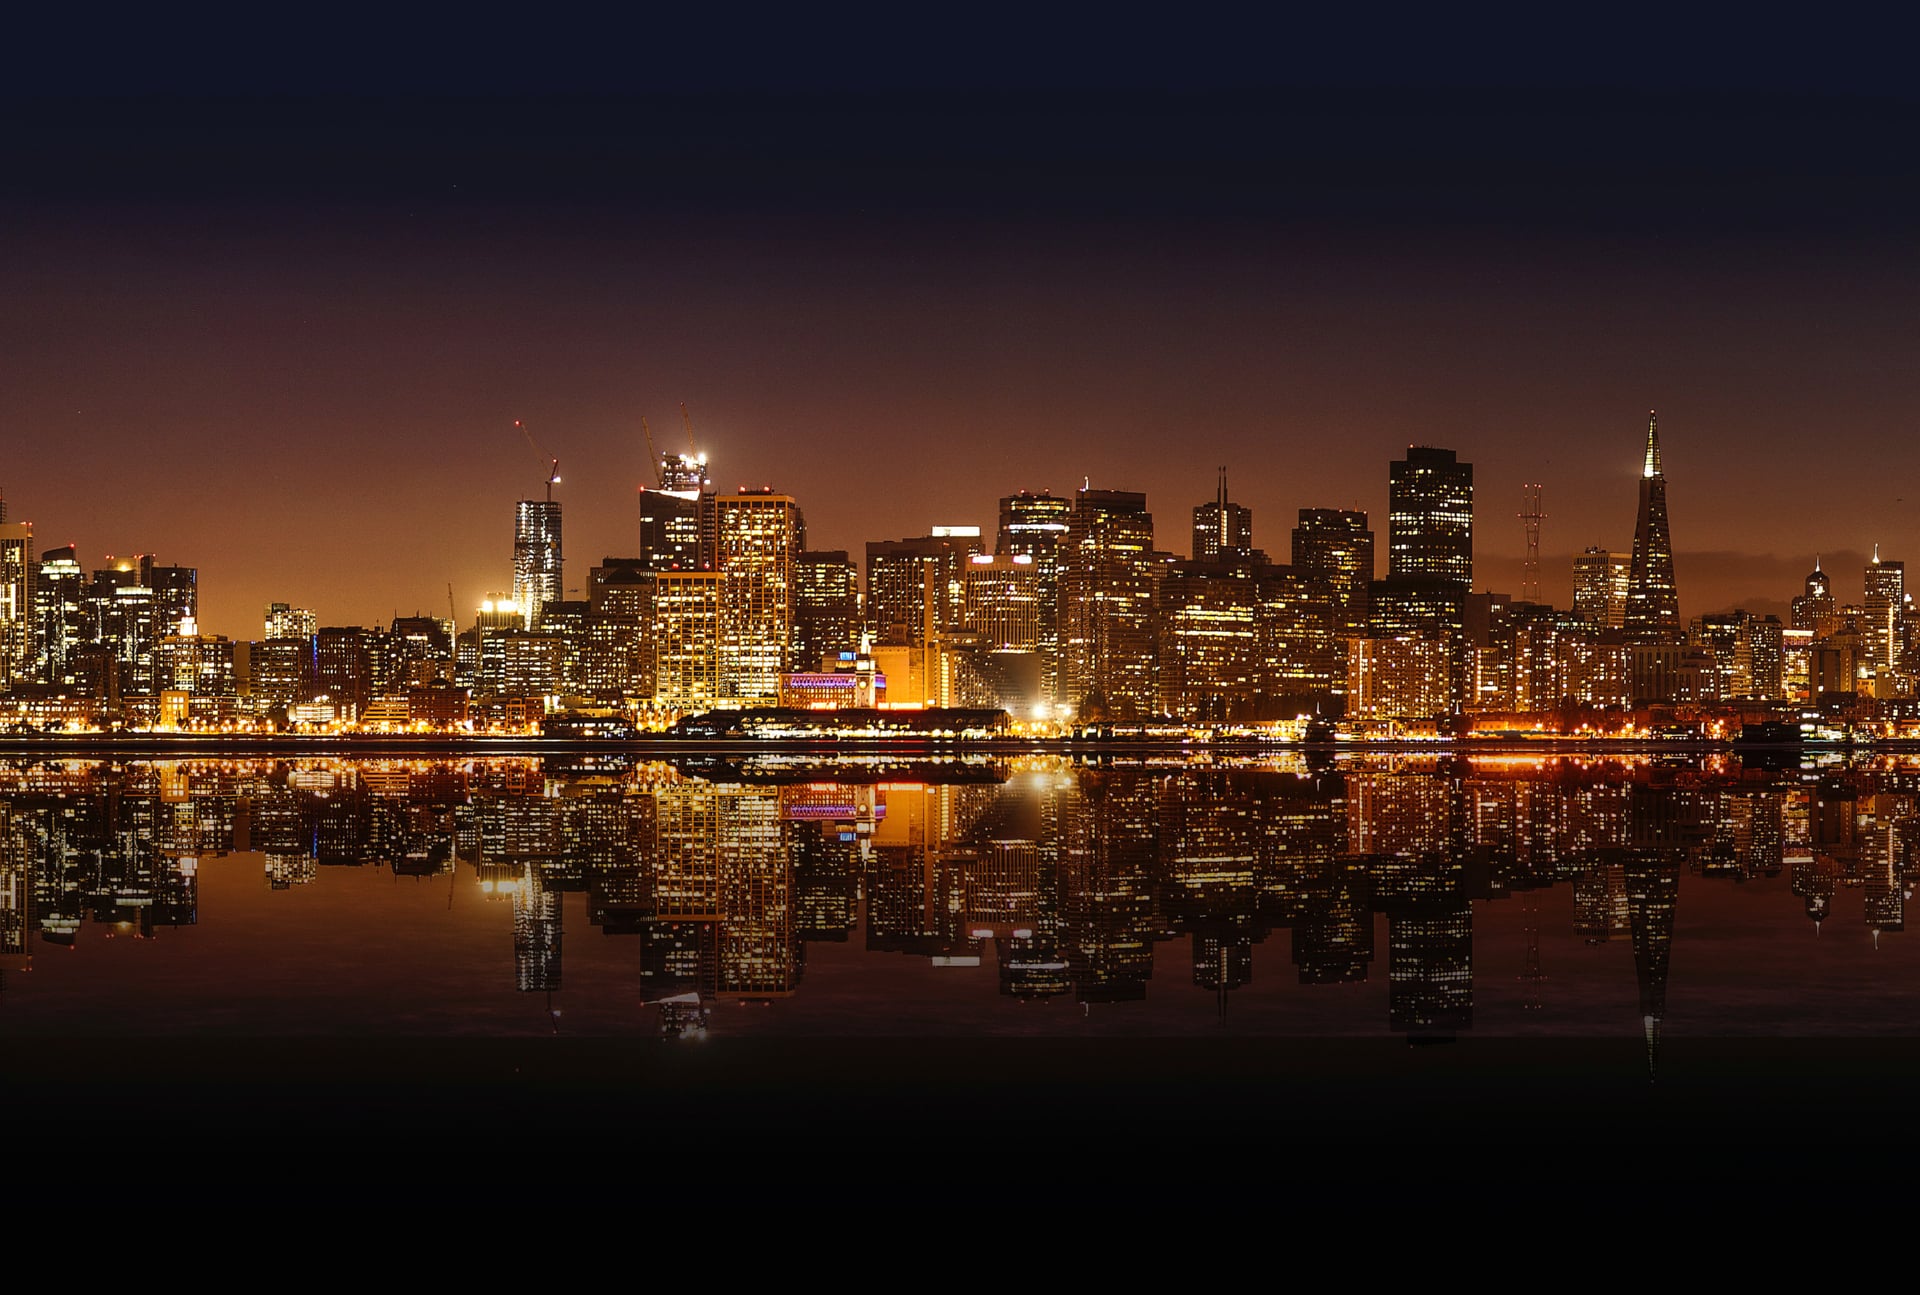 San Francisco City at 1024 x 1024 iPad size wallpapers HD quality